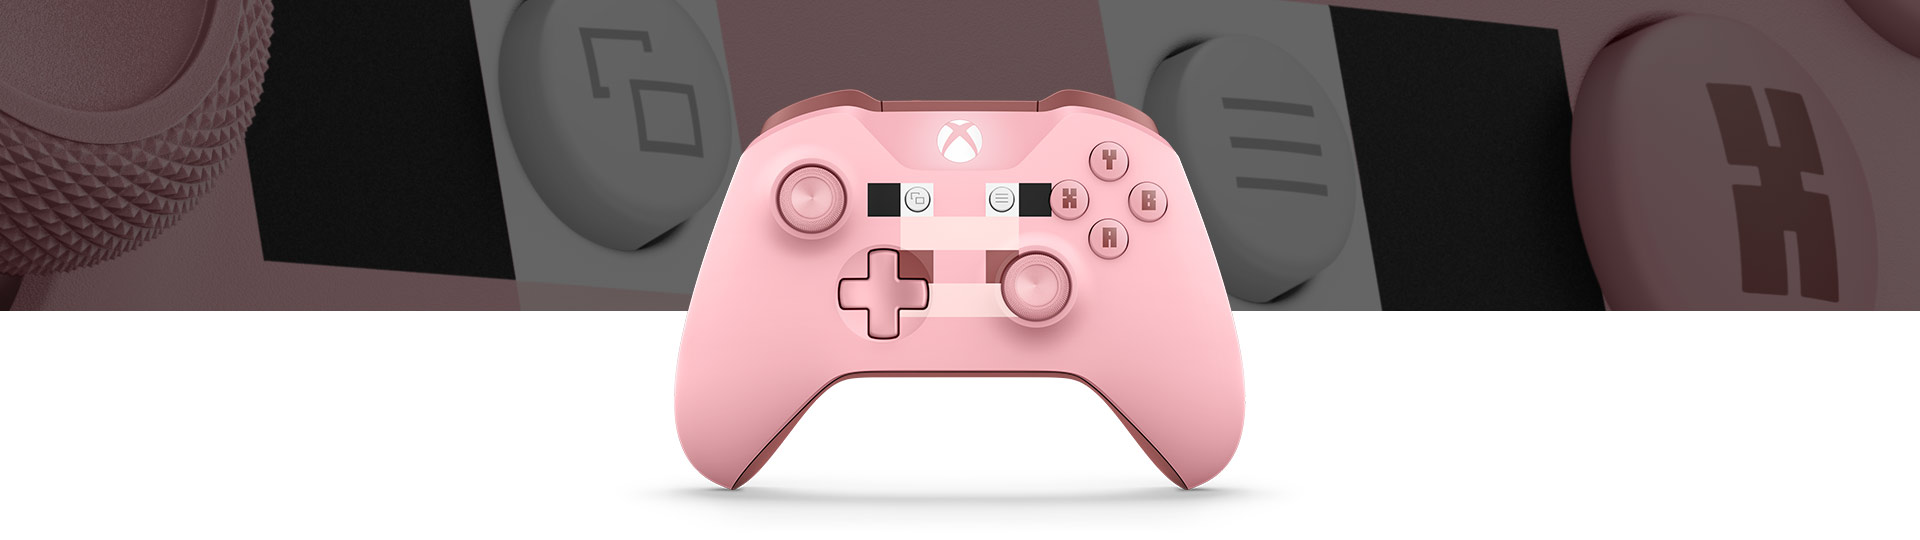 pink minecraft xbox controller